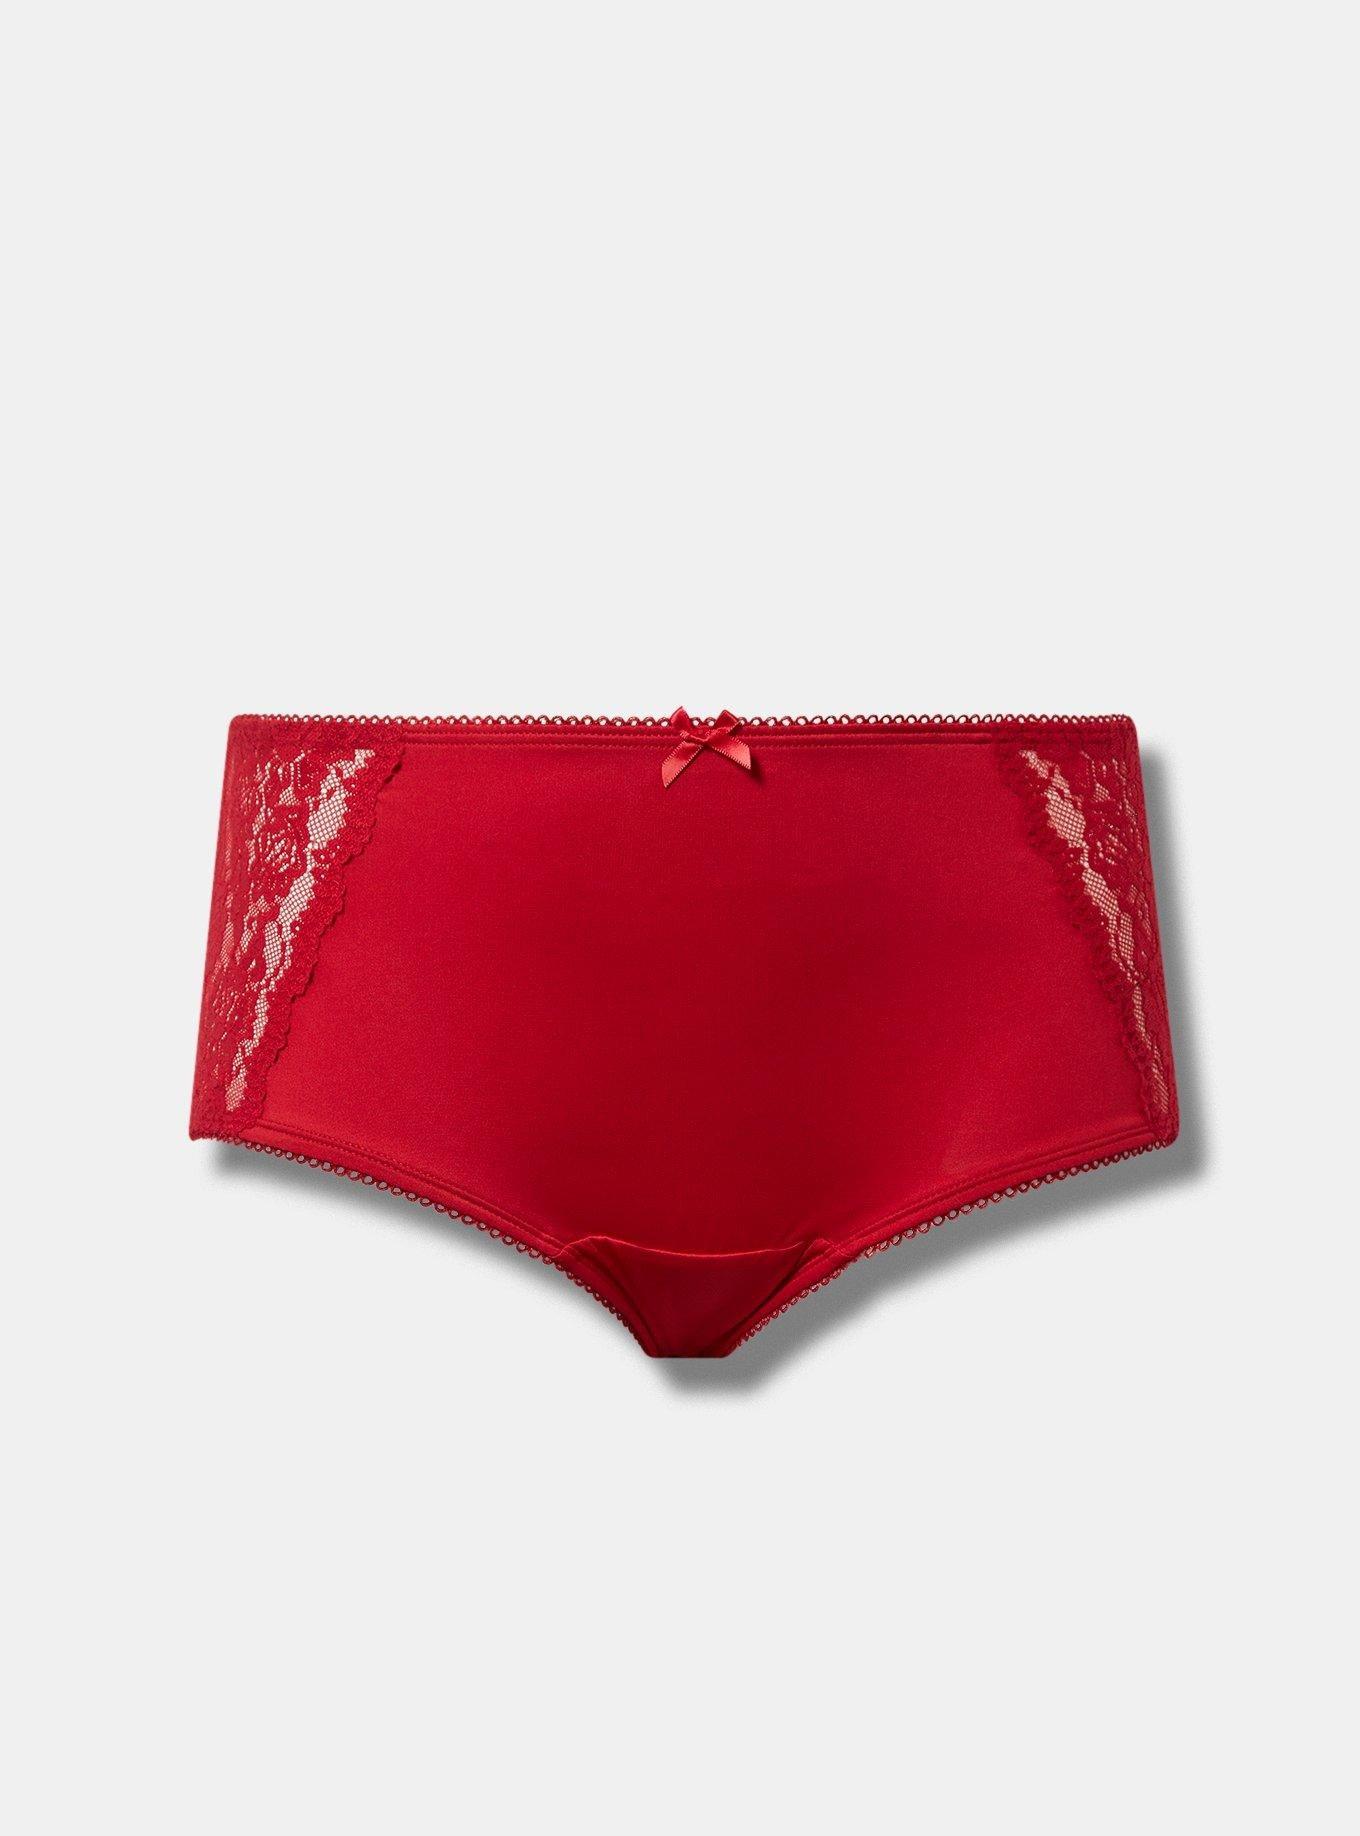 Lingerie G-string Briefs Underwear Panties, Funny Algeria